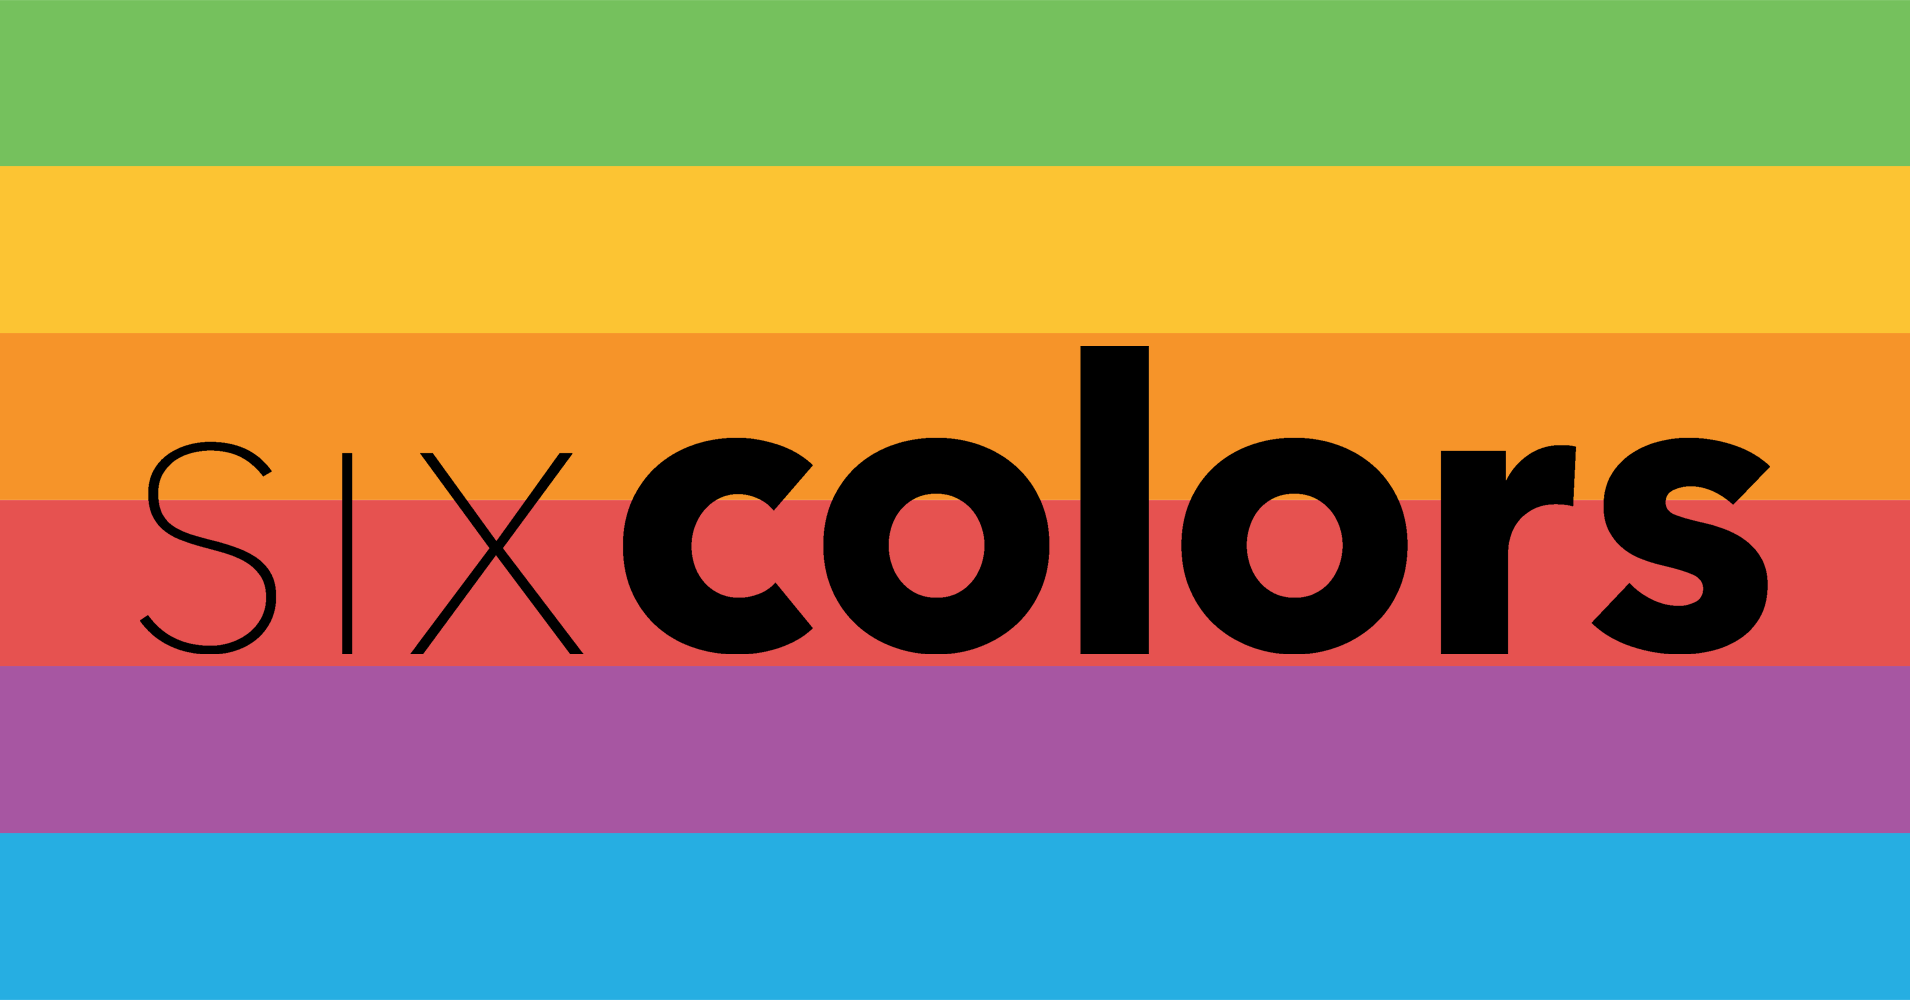 sixcolors.com